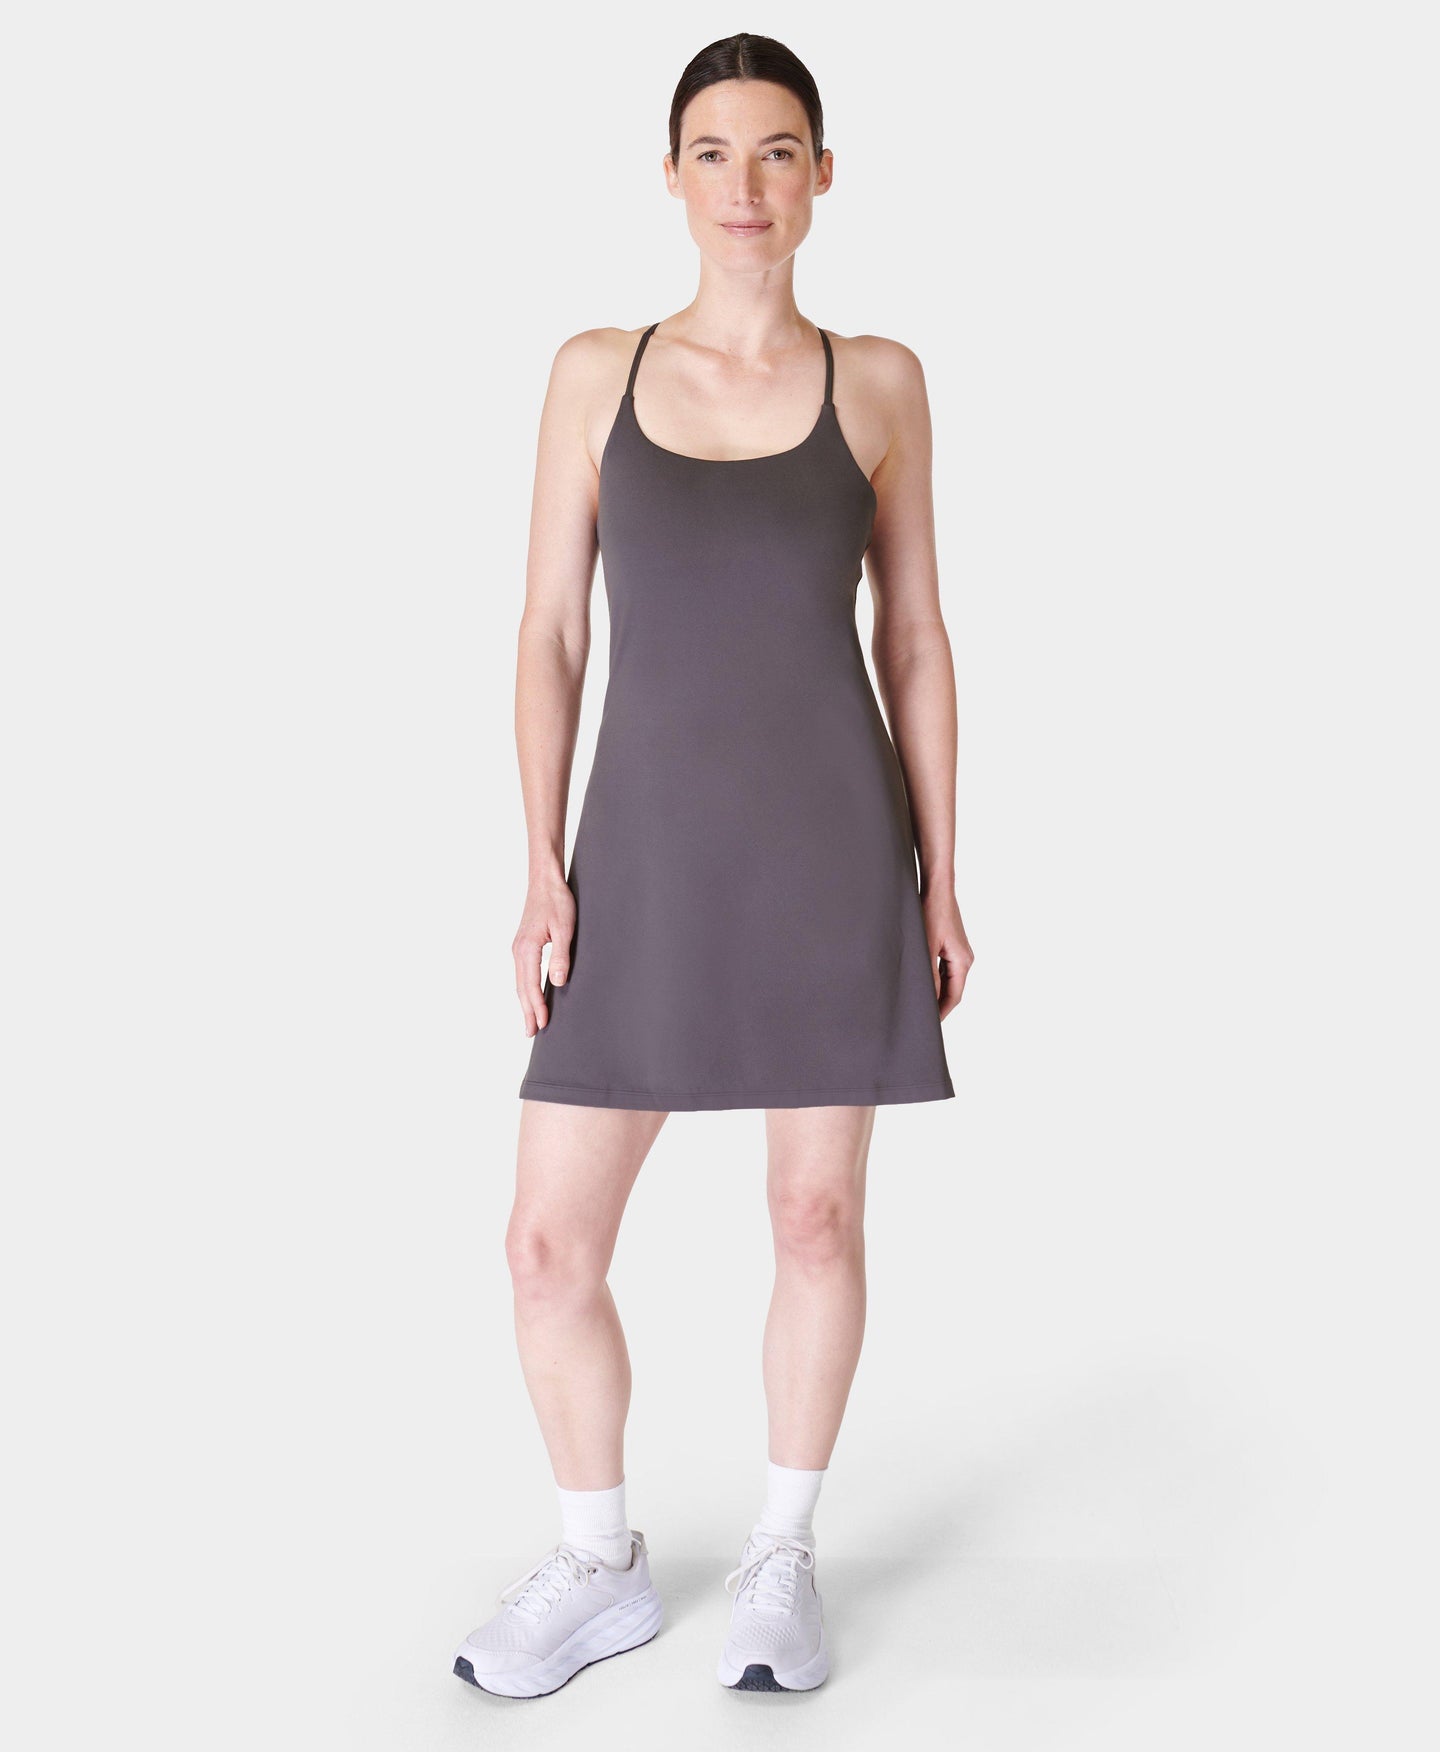 All Round Workout Dress Sb8991 Urban-Grey